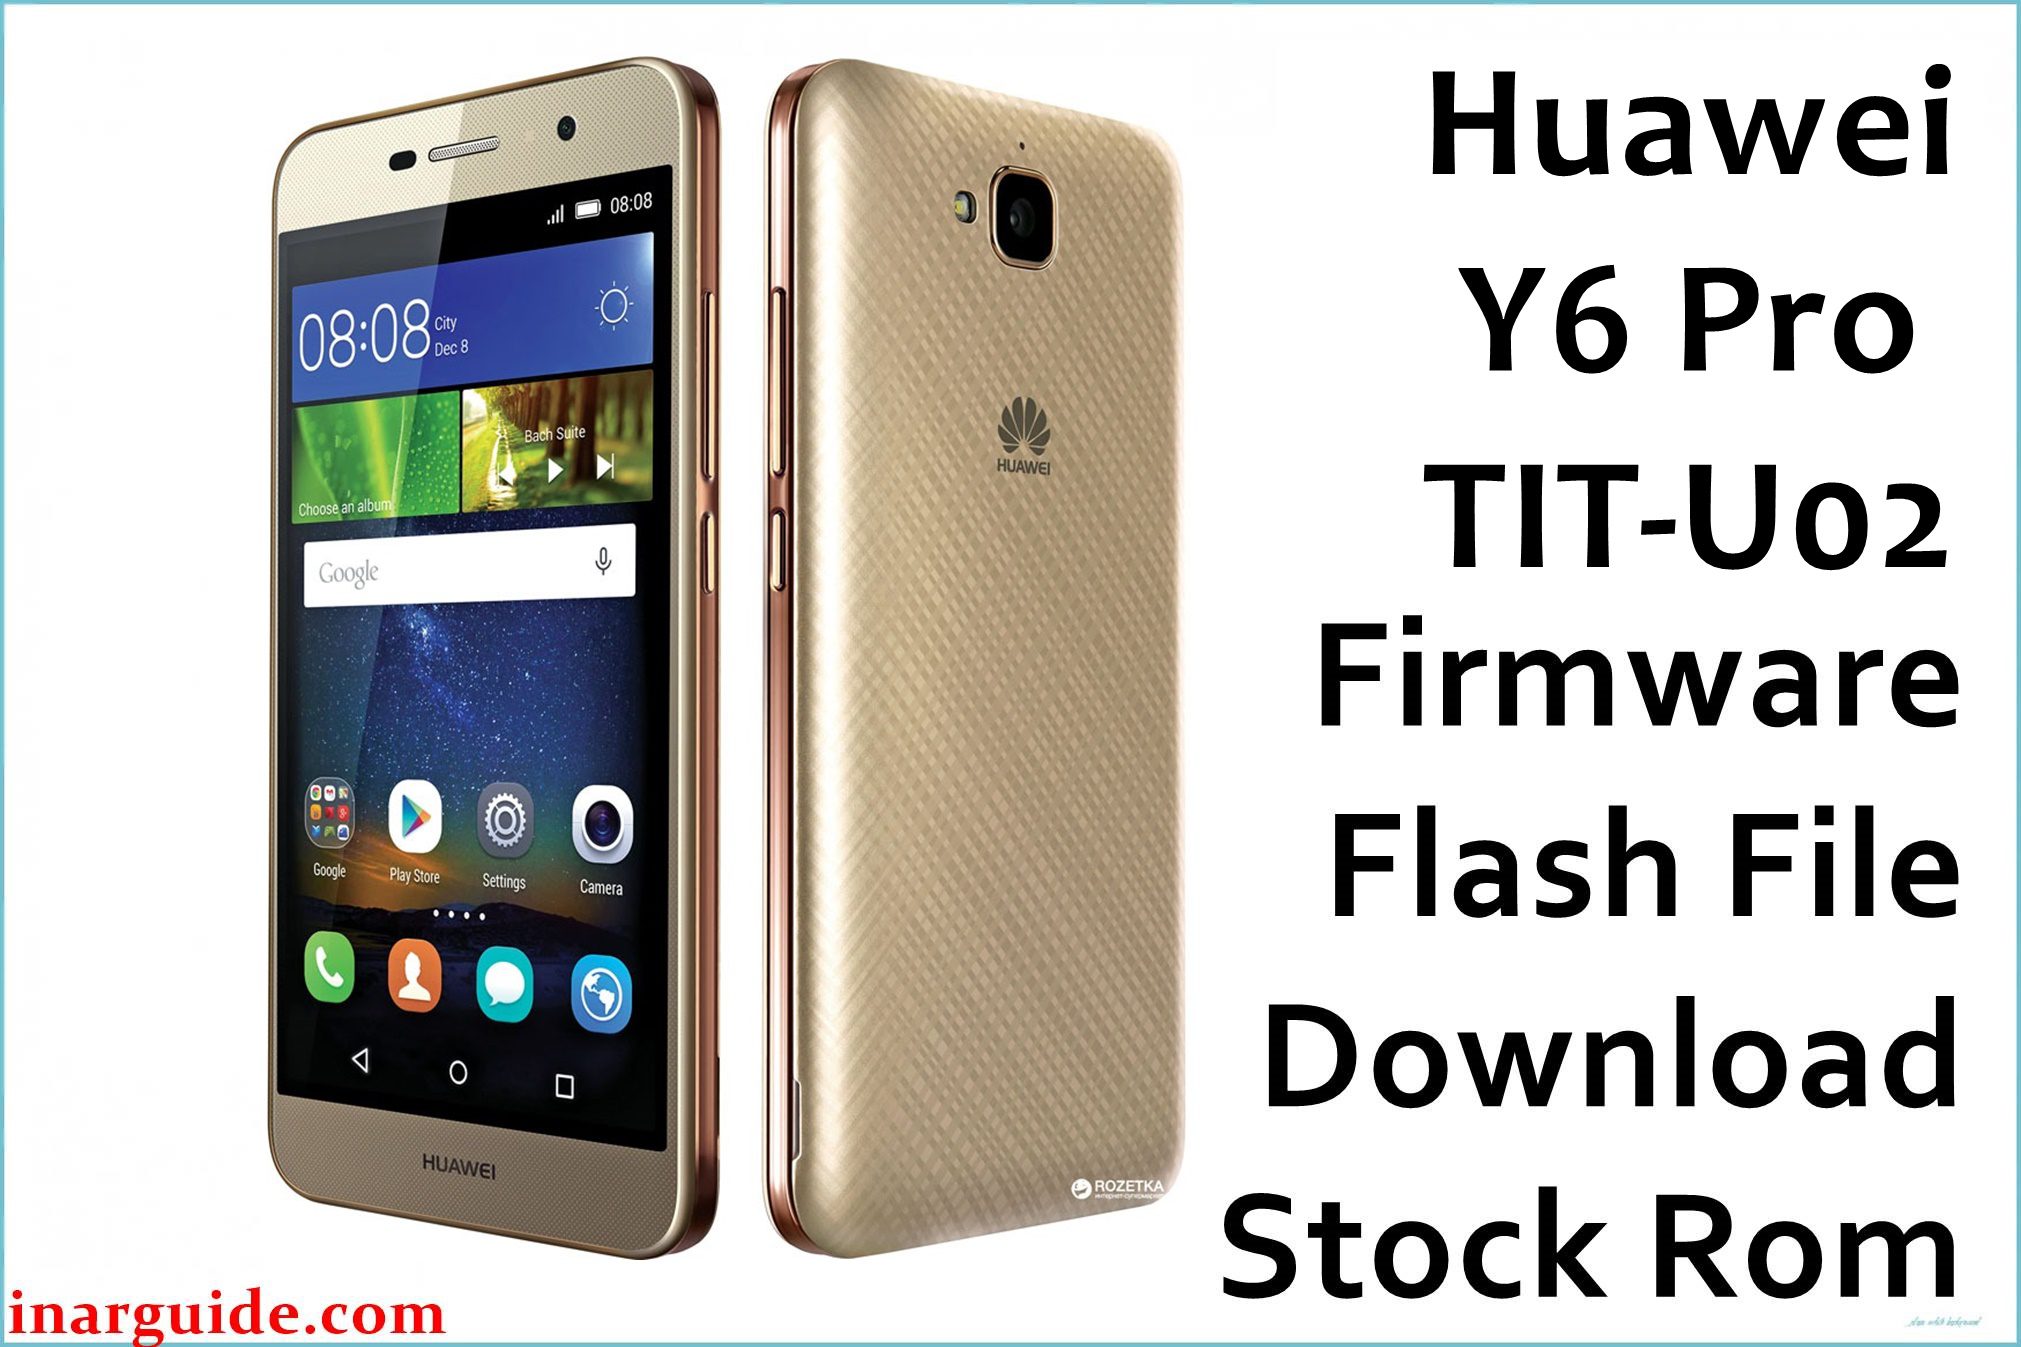 Huawei Y6 Pro TIT U02